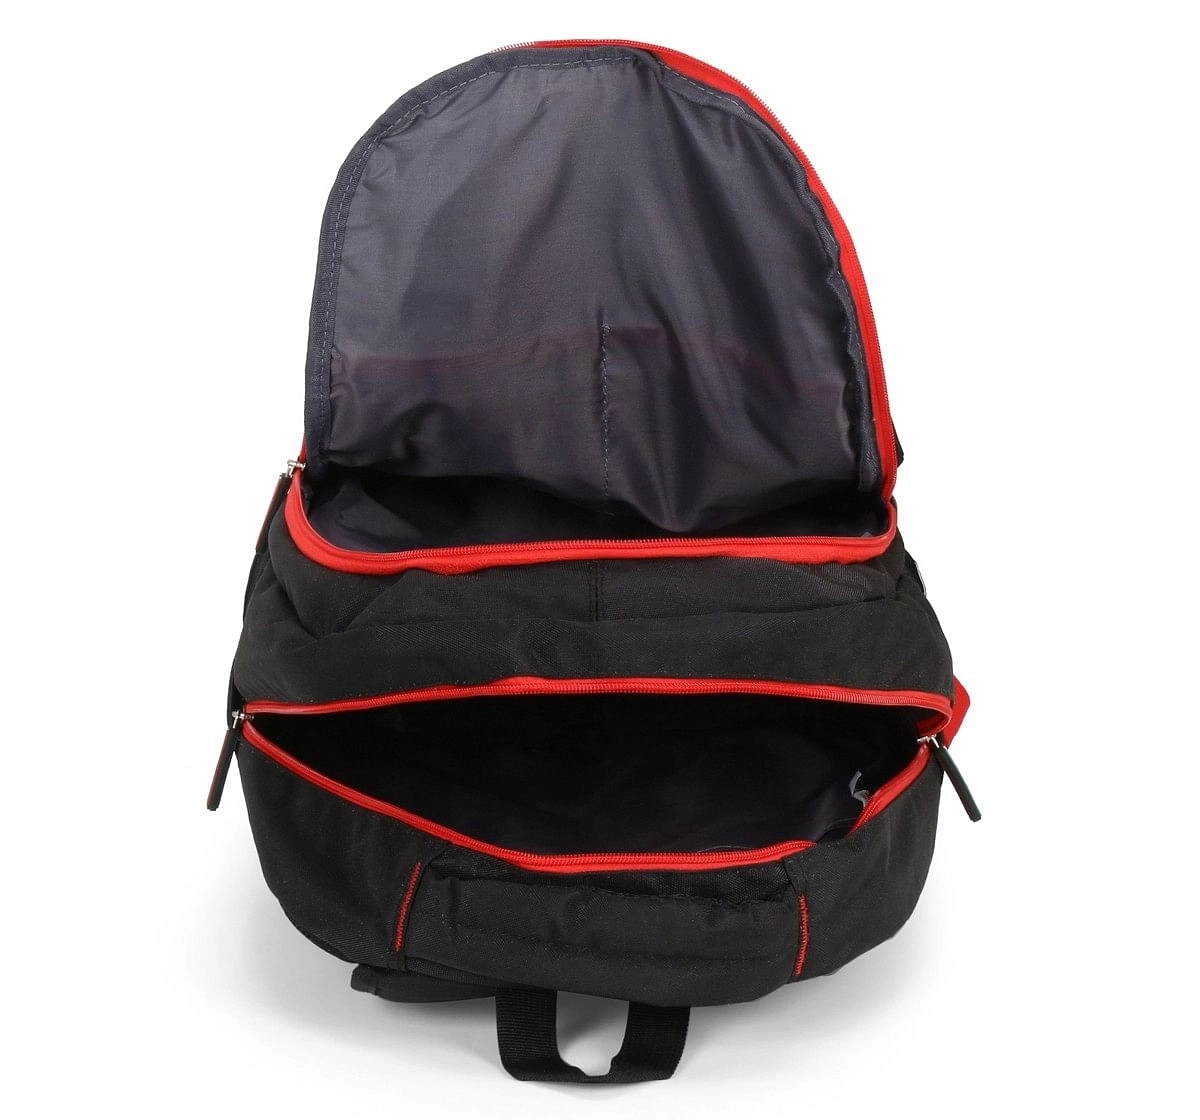 Ferrari Blazing Fast 17 Backpack School bags for kids Multicolor 3Y+